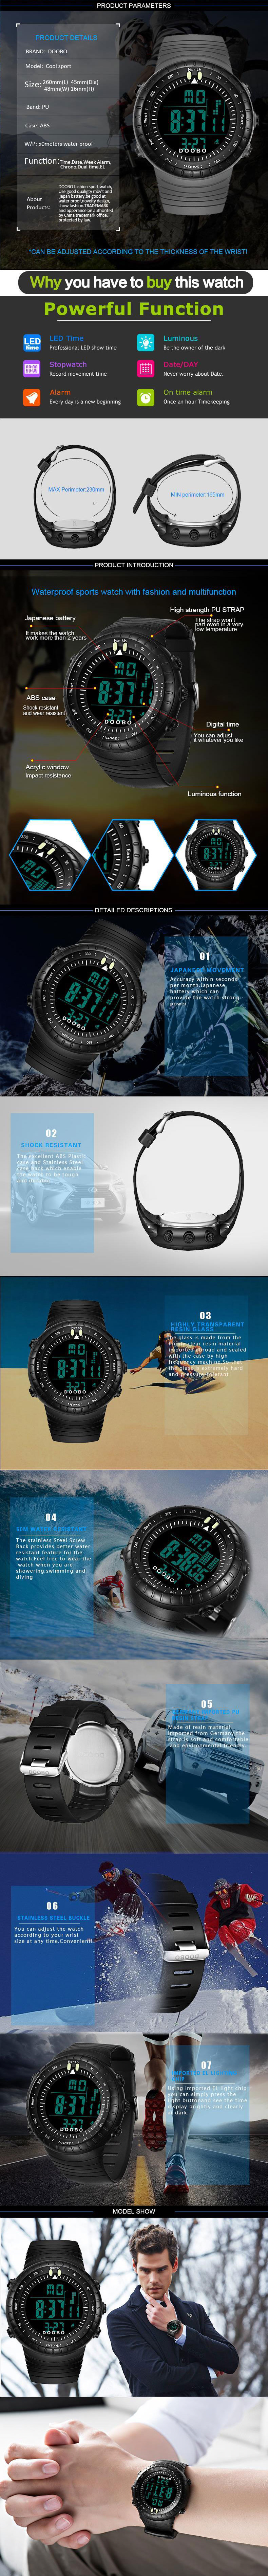 DOOBO-D001-Digital-Watch-Fashion-Chronograph-50m-Waterproof-Luminous-Display-Outdoor-Sport-Watch-1250917